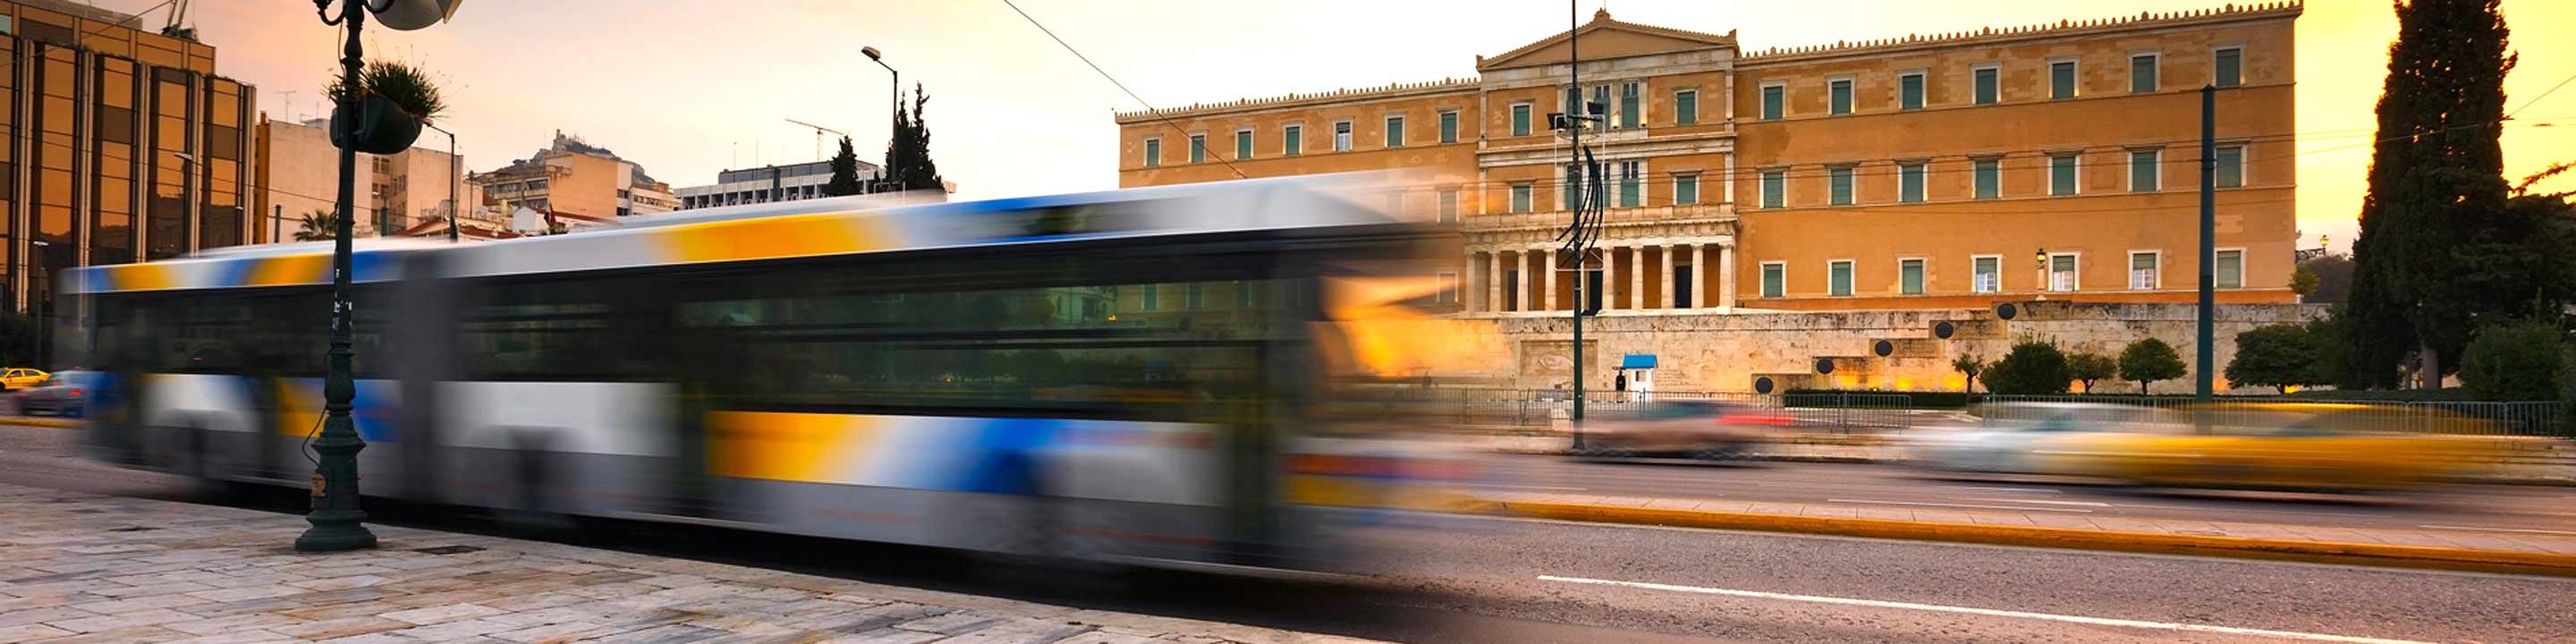 Urban bus in Athens